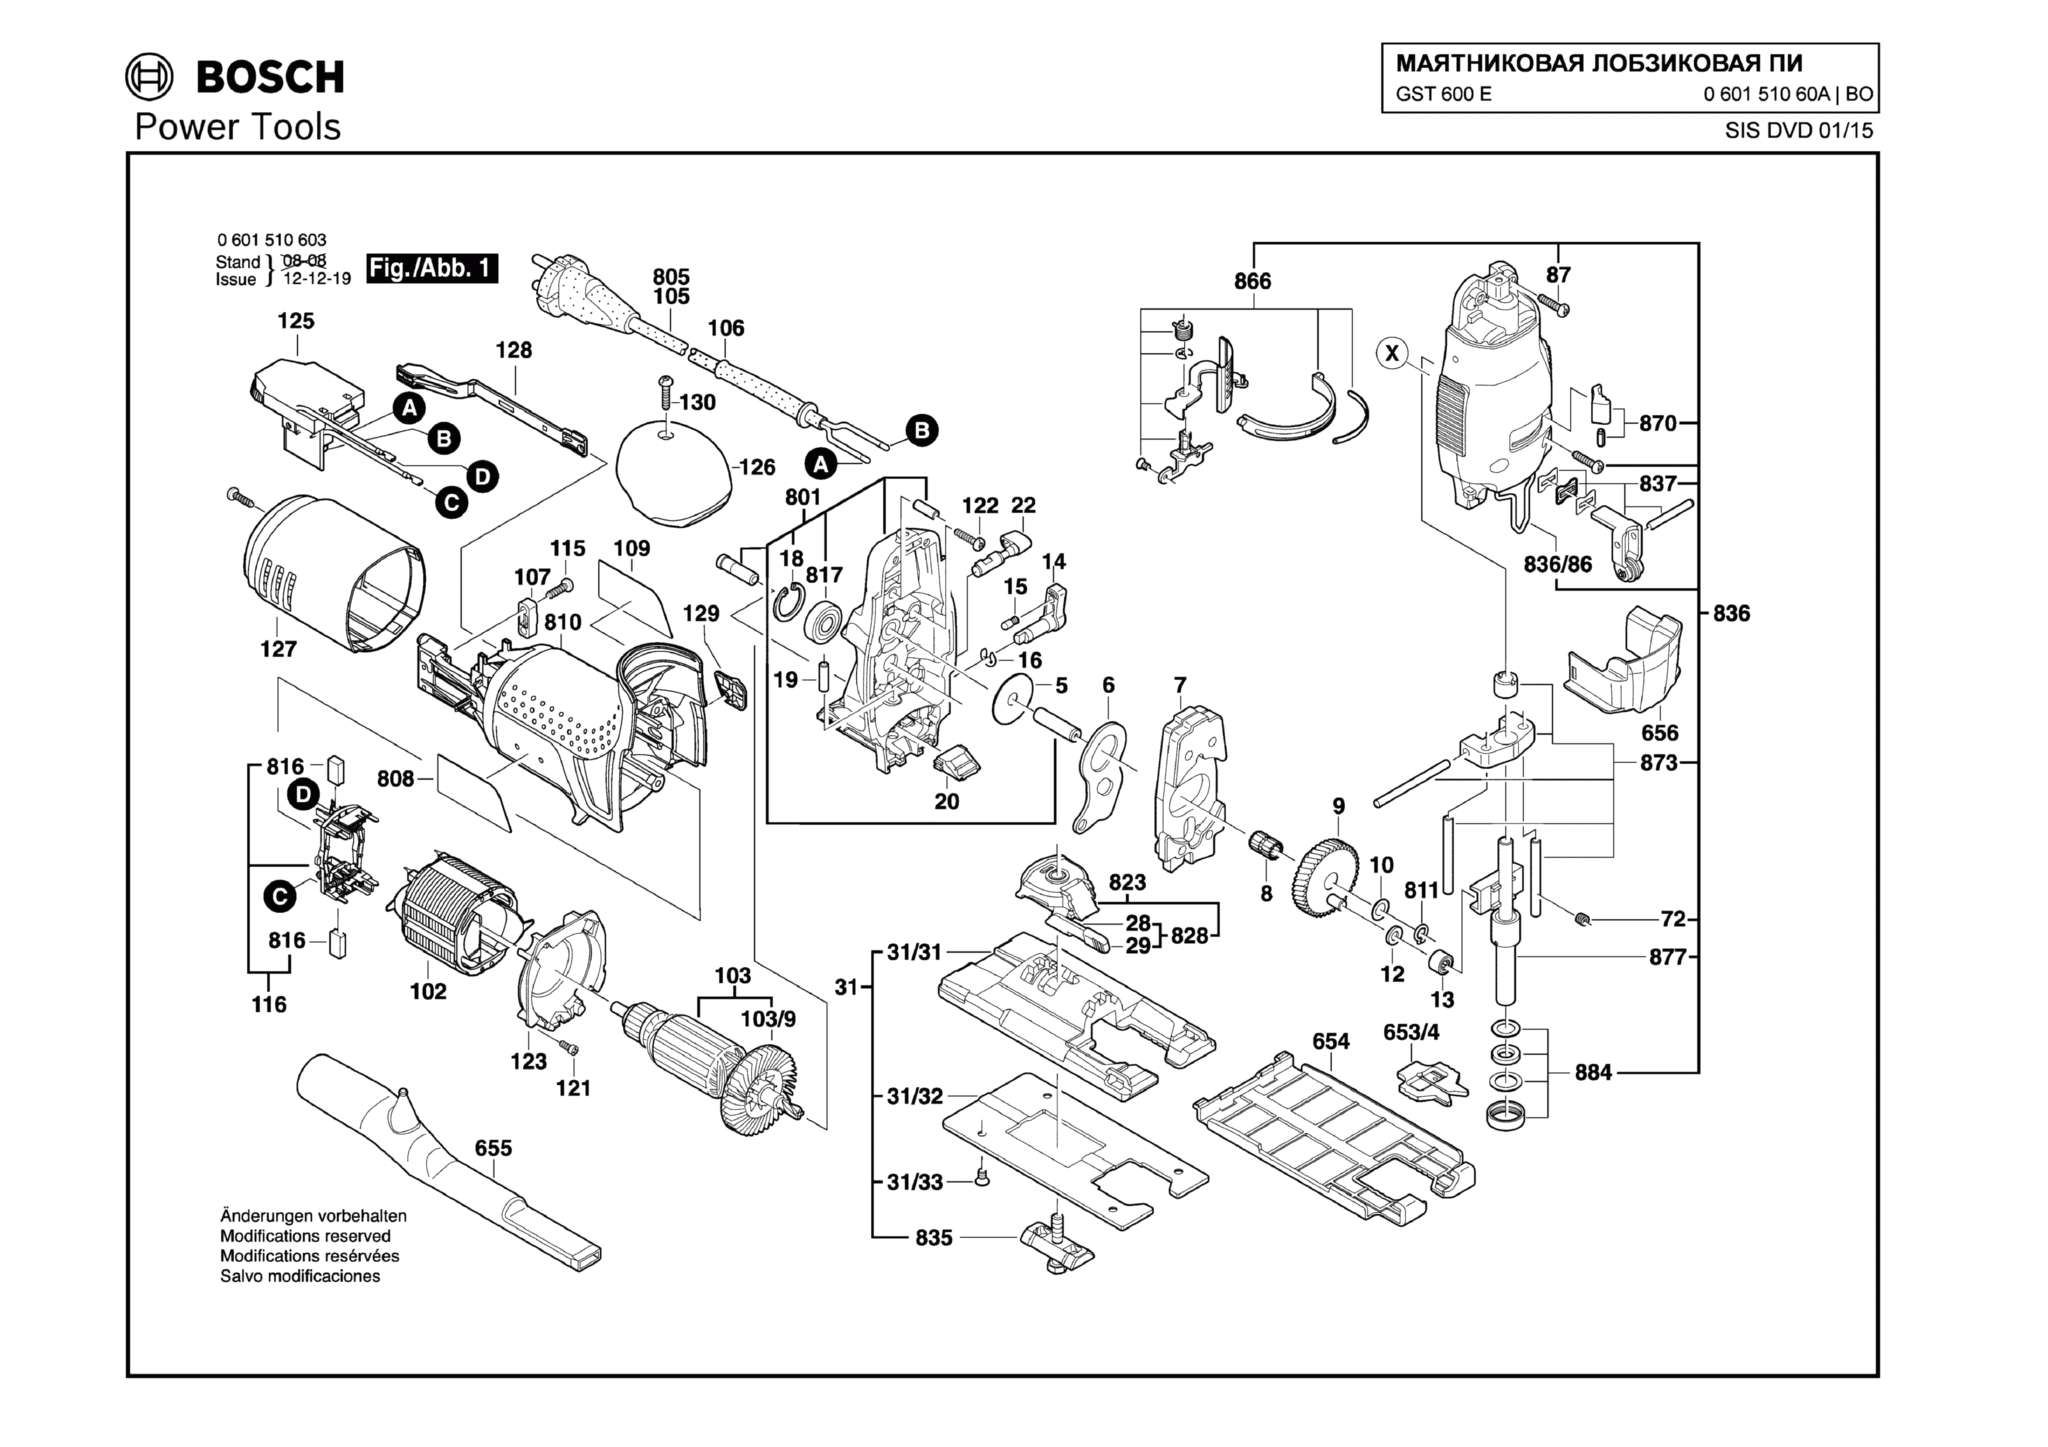 Запчасти, схема и деталировка Bosch GST 600 E (ТИП 060151060A)